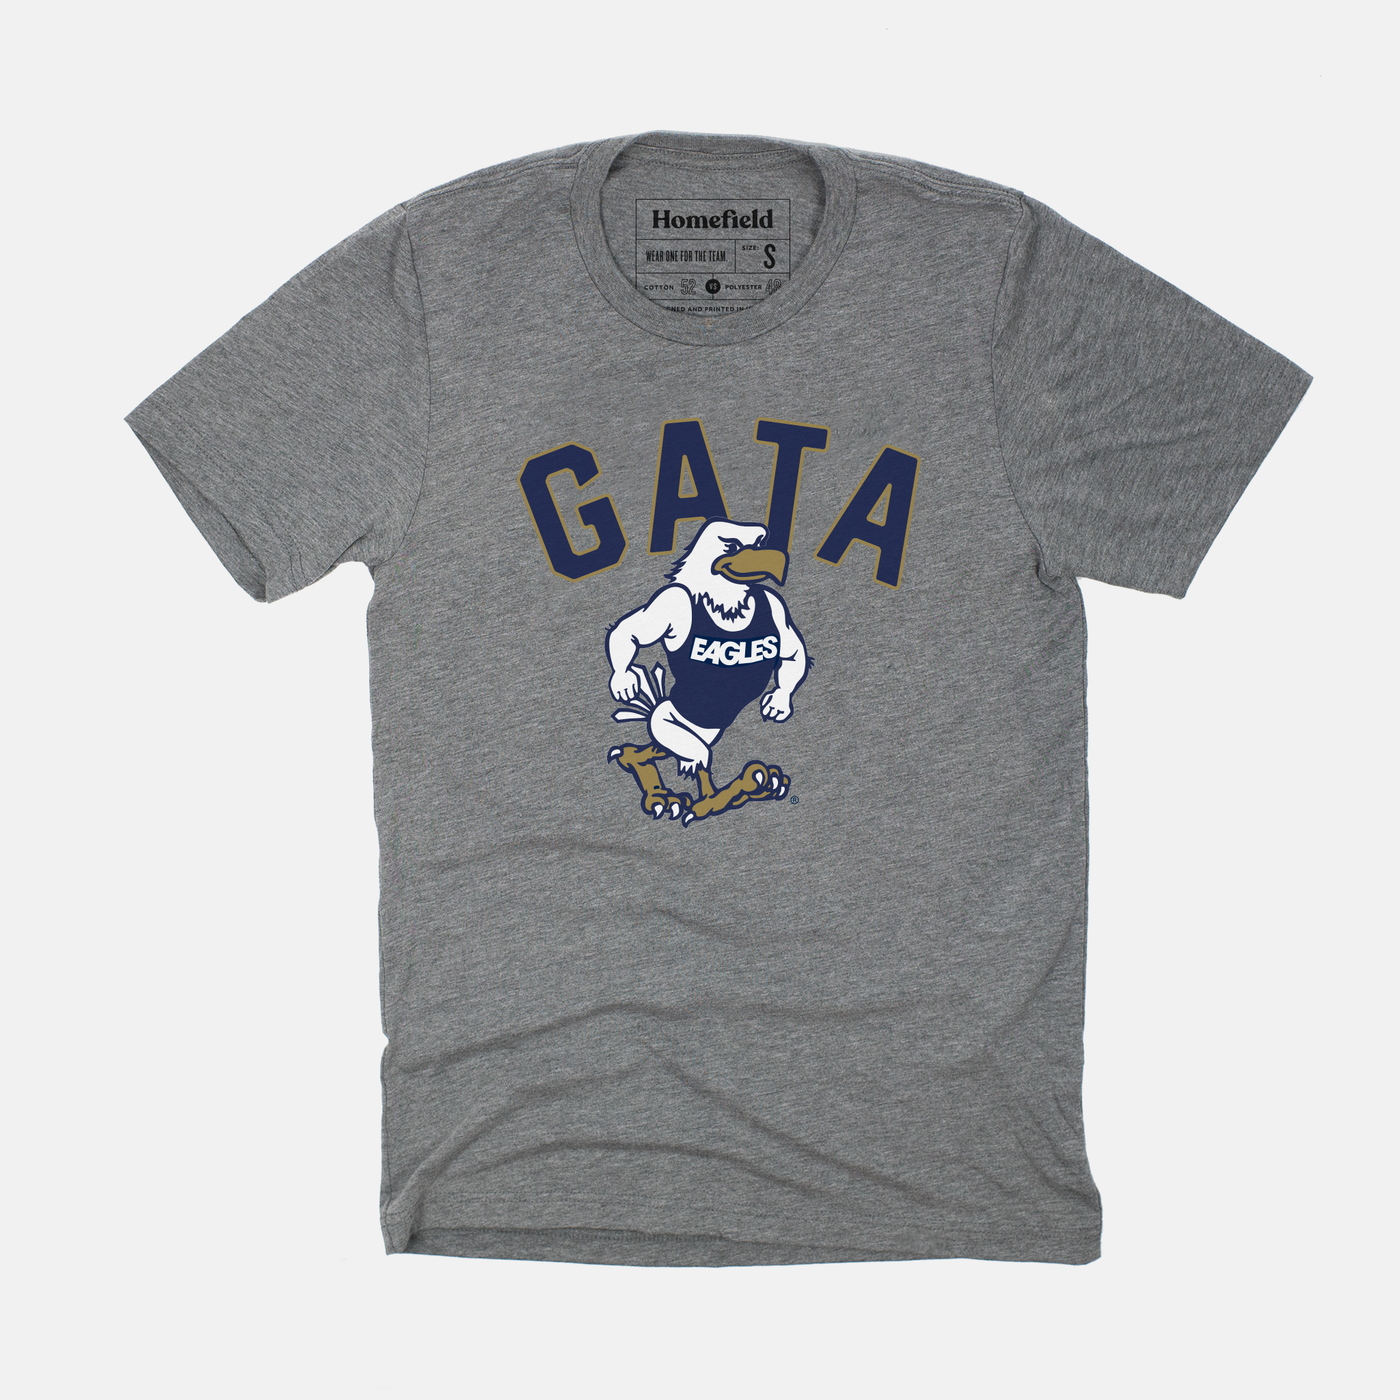 Georgia Southern GATA T-Shirt